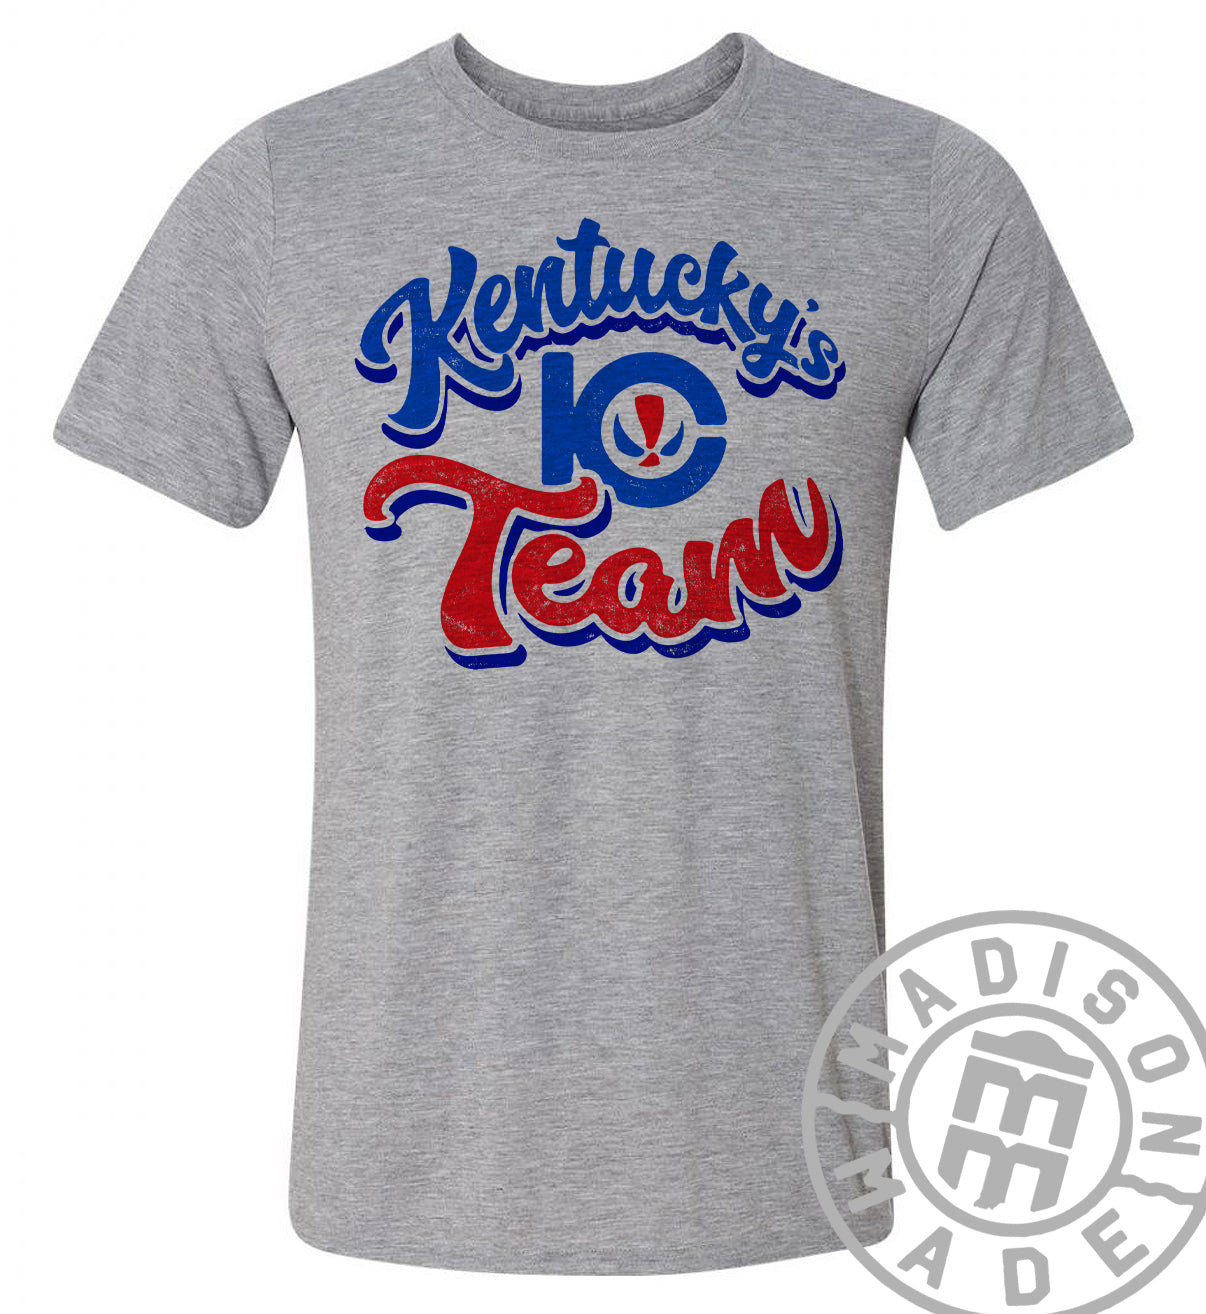 Kentucky's Team Tee